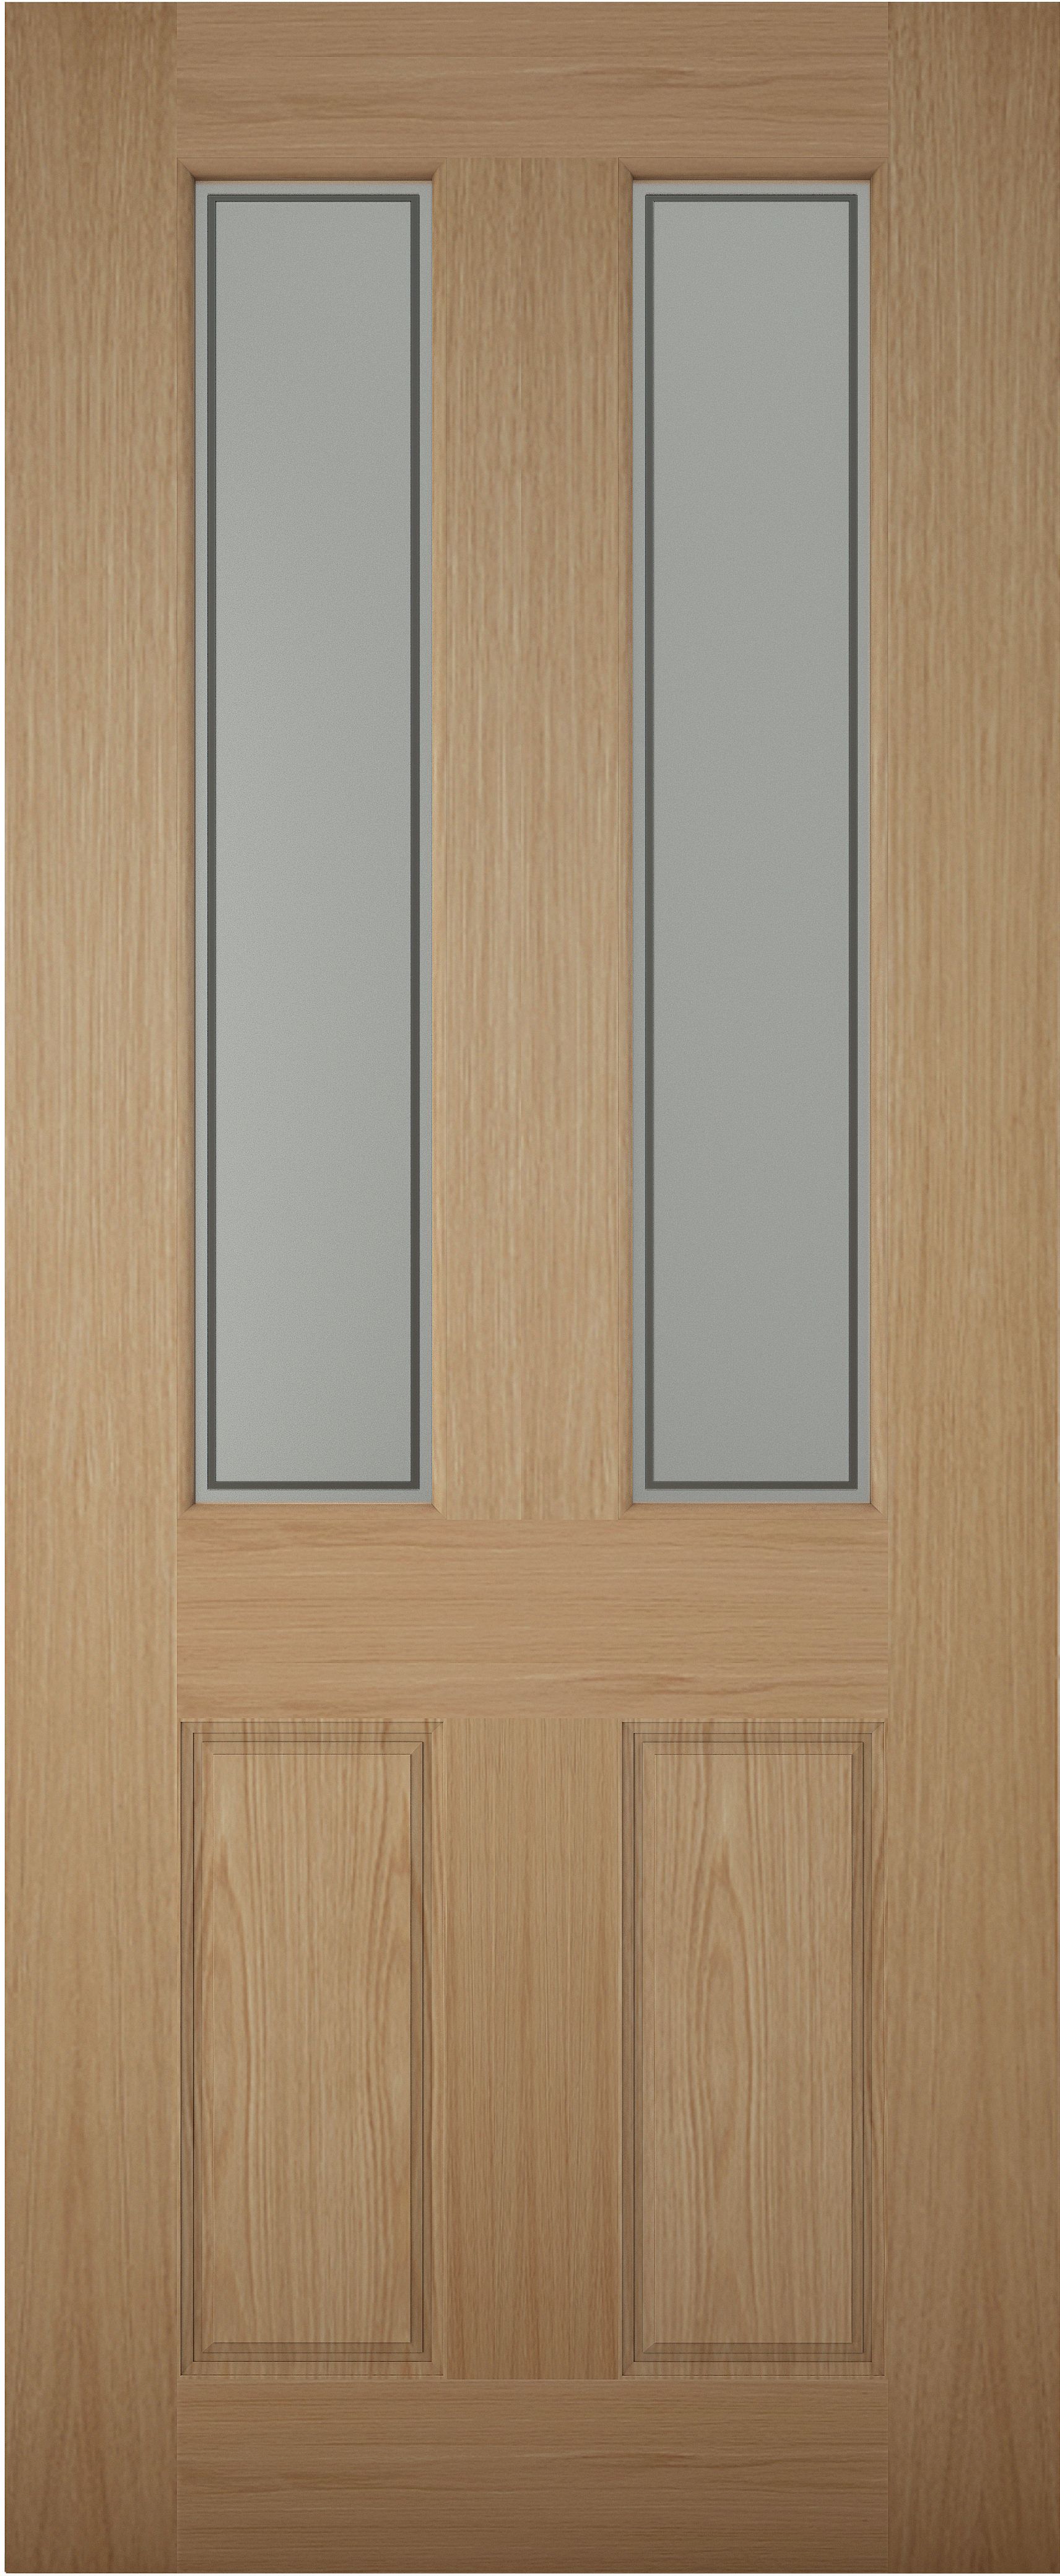 4 panel Frosted Glazed White oak veneer External Front door, (H)2032mm (W)813mm